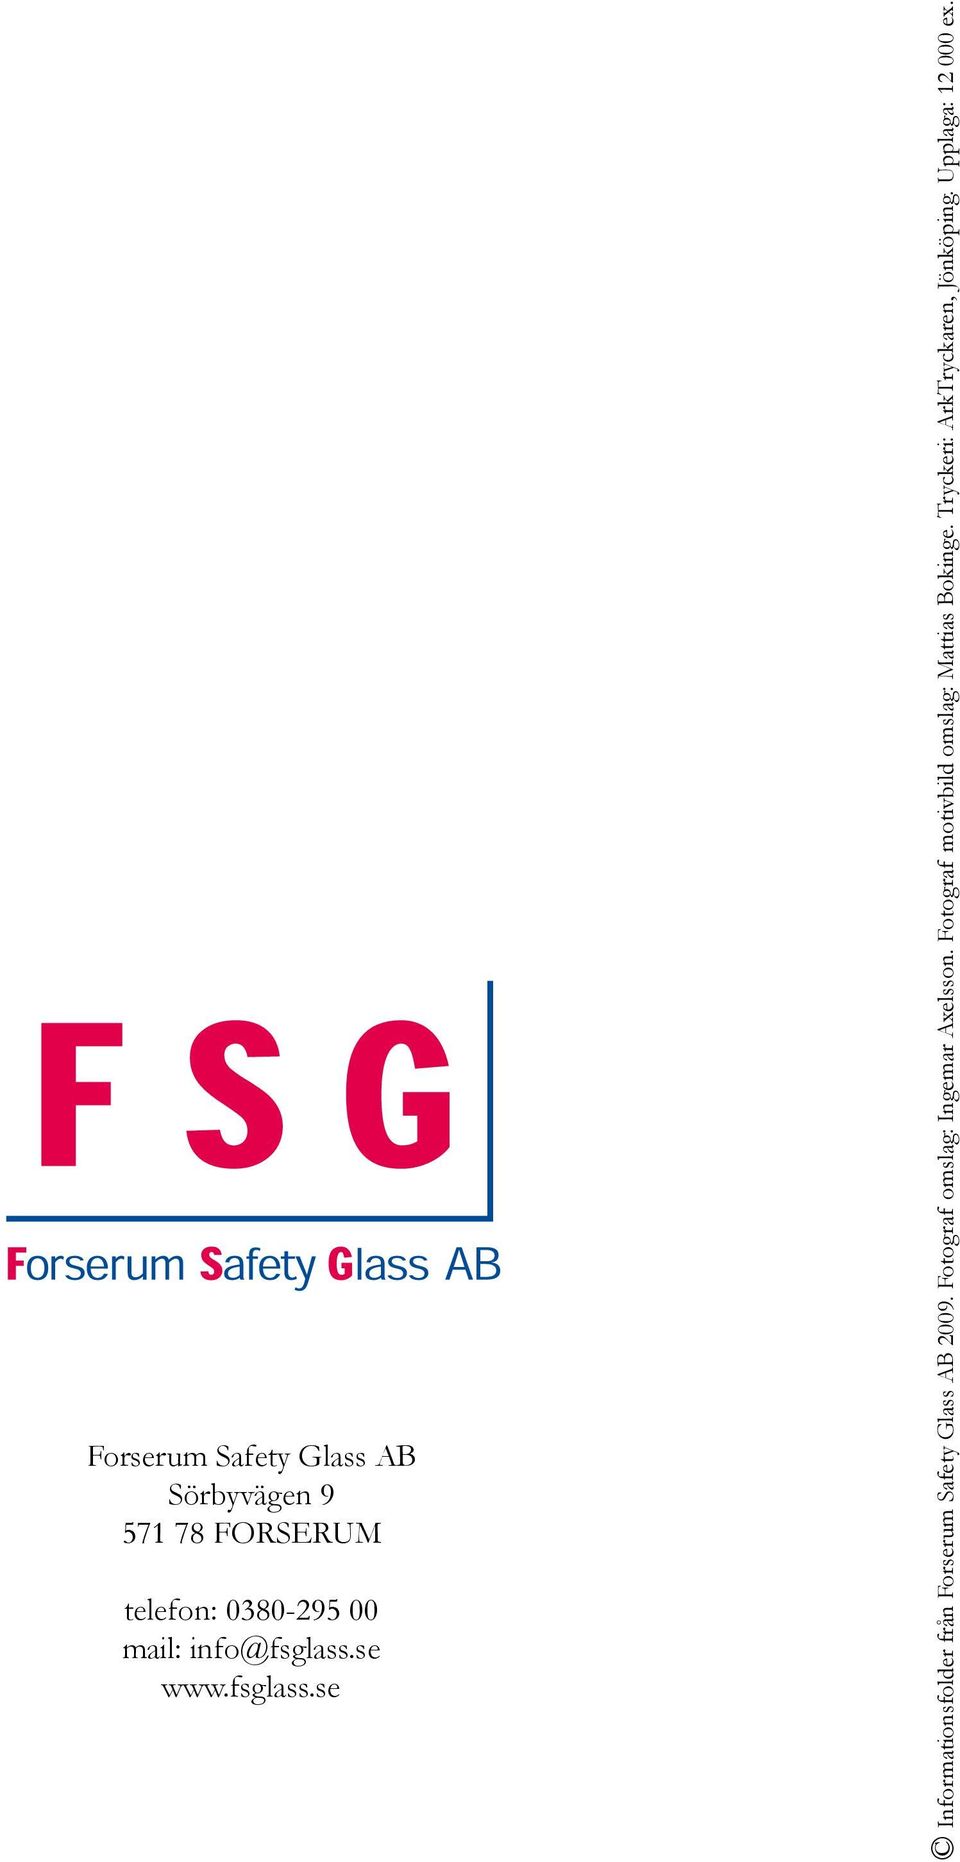 se www.fsglass.se Informationsfolder från Forserum Safety Glass AB 2009.